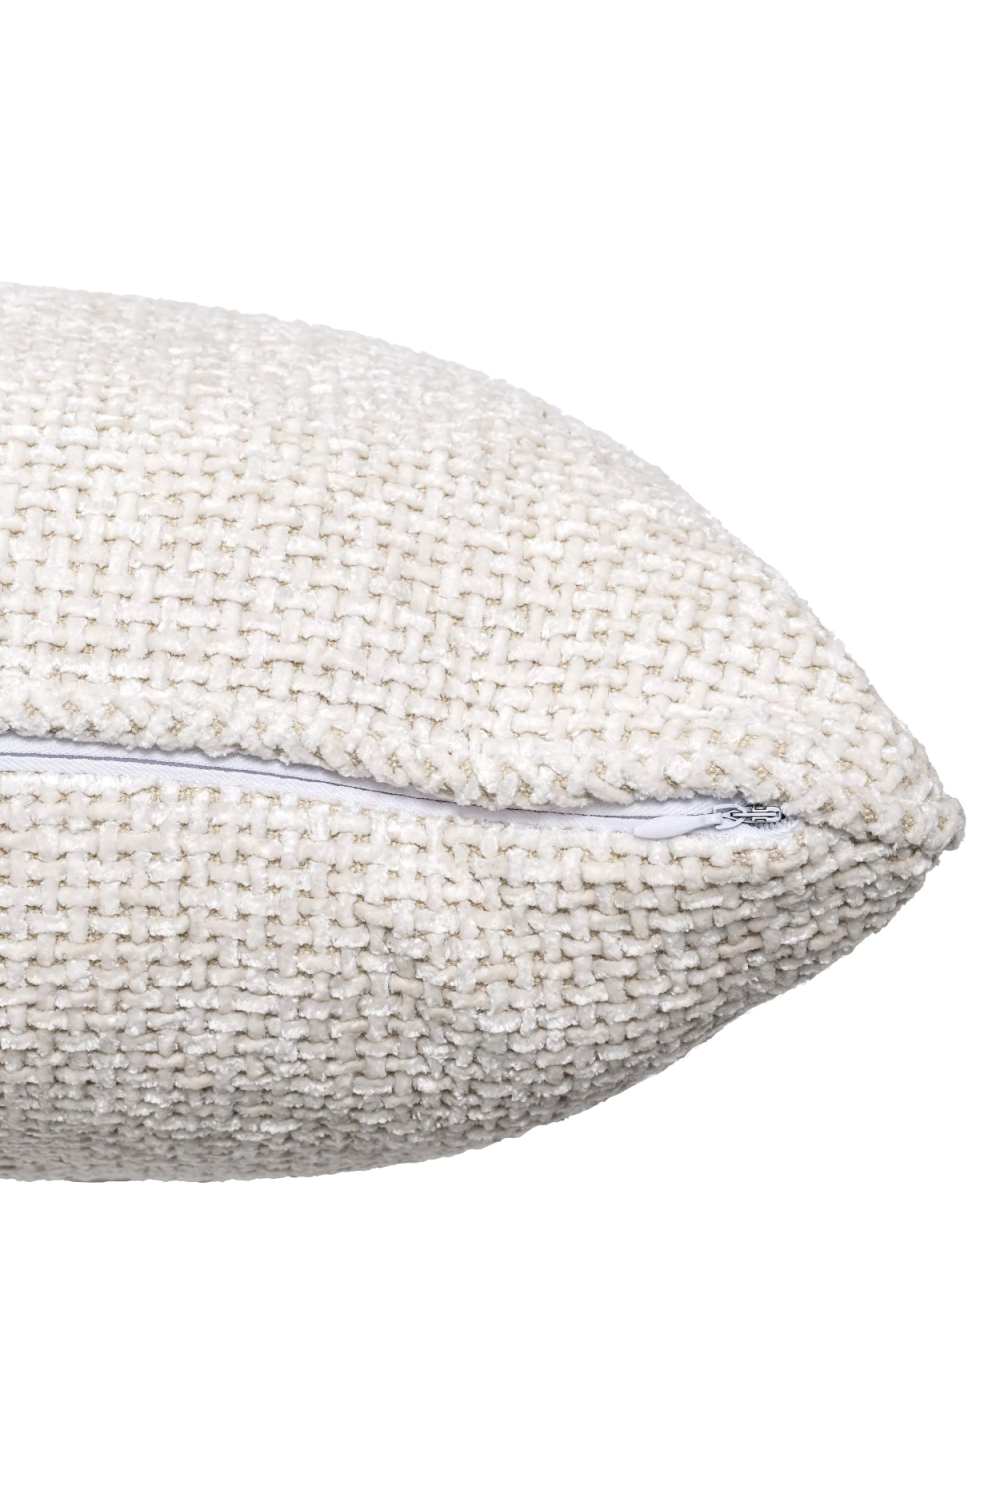 Rectangular White Cushion | Eichholtz Lyssa | Oroa.com